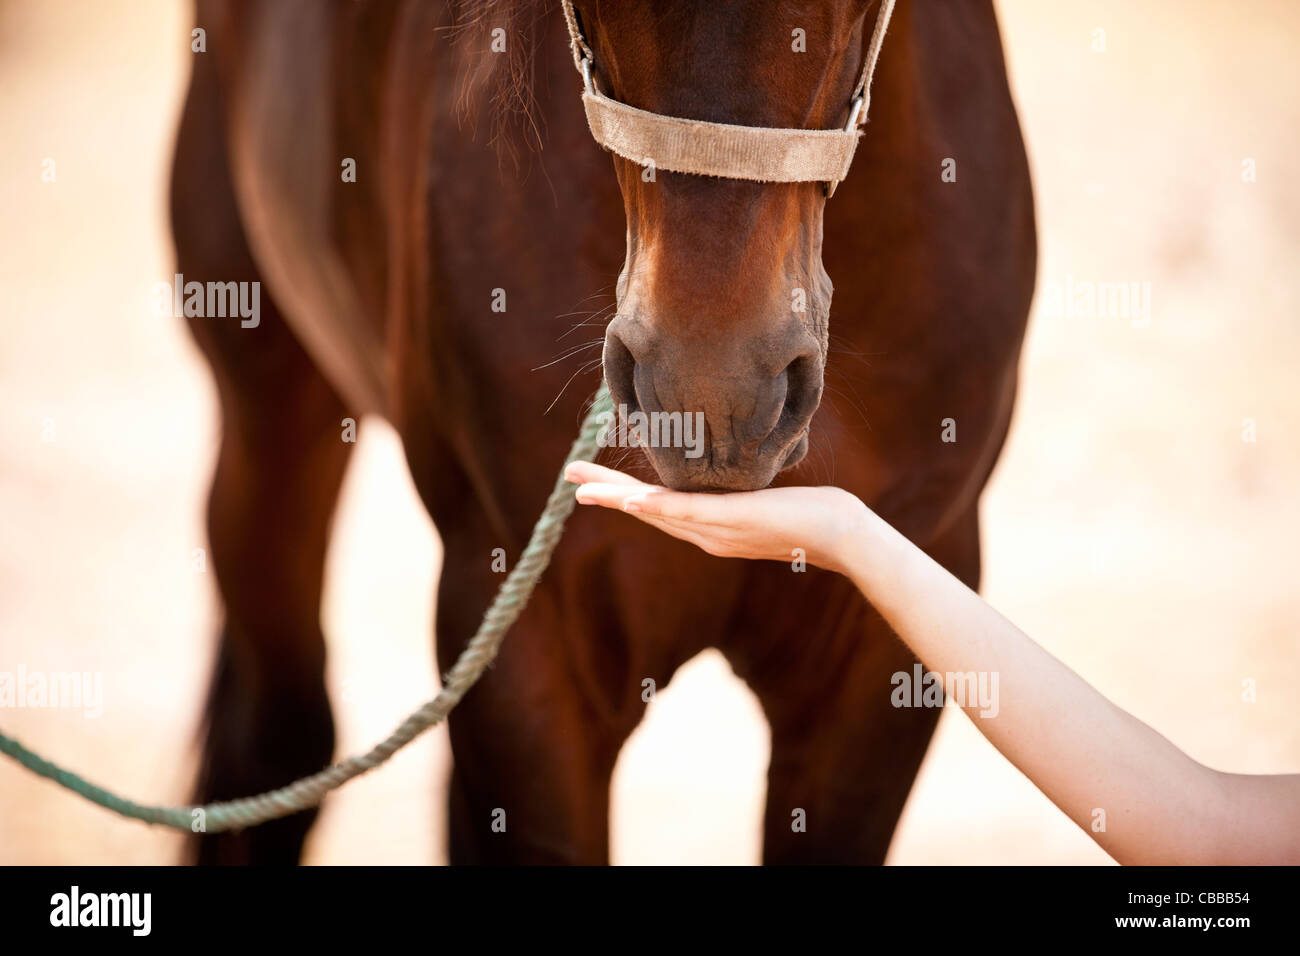 A woman feeding a horse, close-up Stock Photo